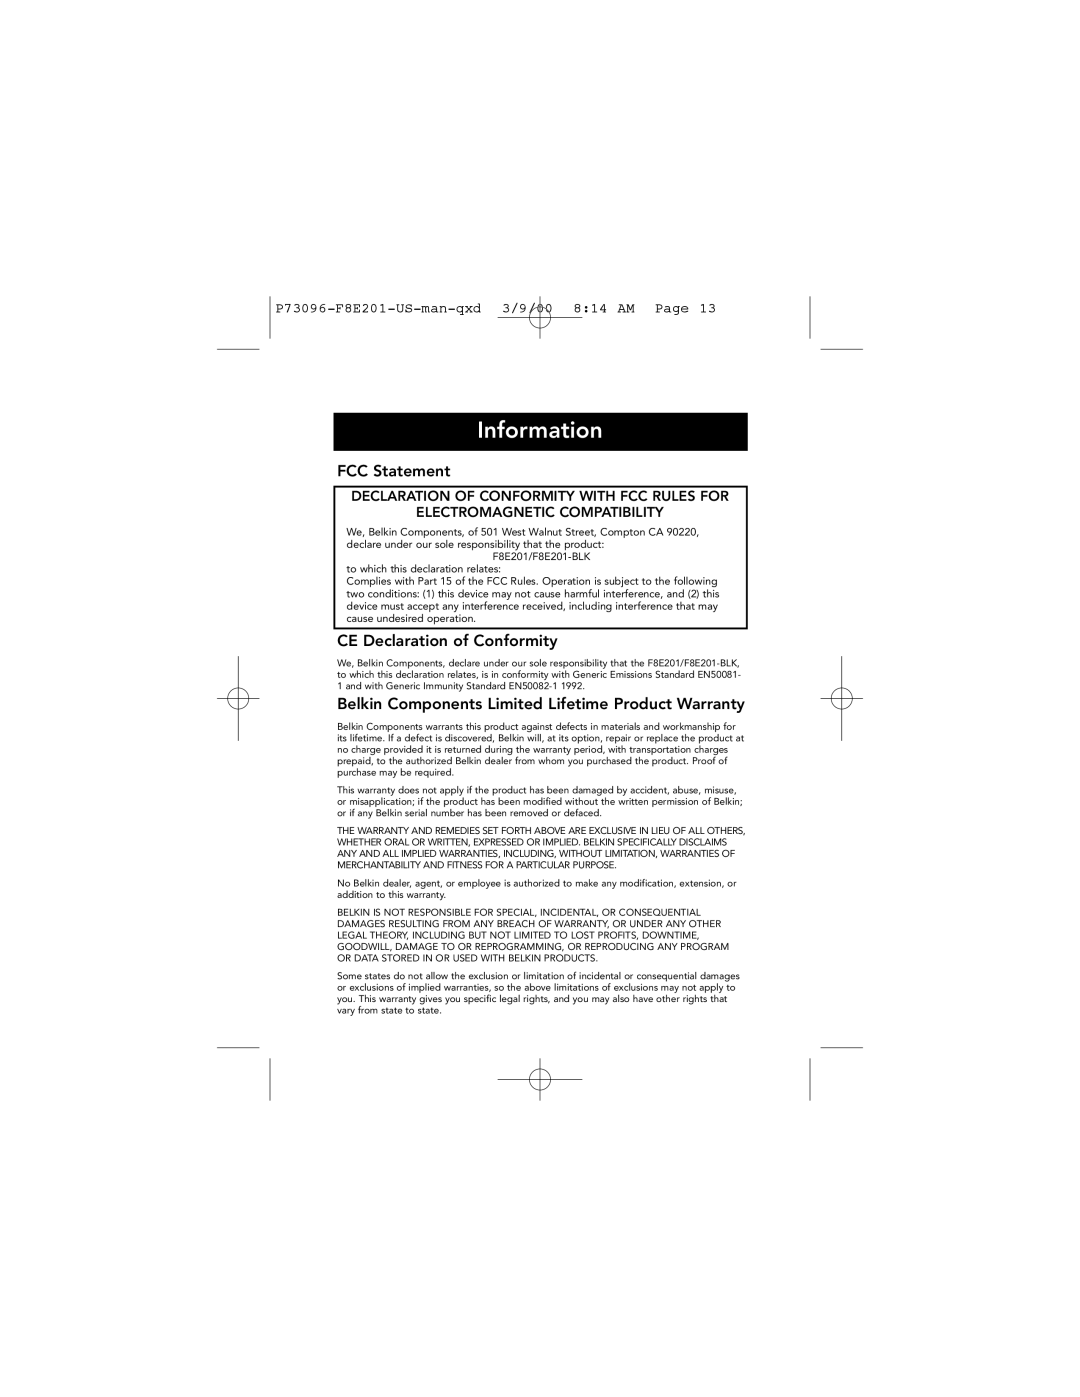 Belkin user manual Information, FCC Statement, CE Declaration of Conformity, P73096-F8E201-US-man-qxd 3/9/00 814 AM Page 